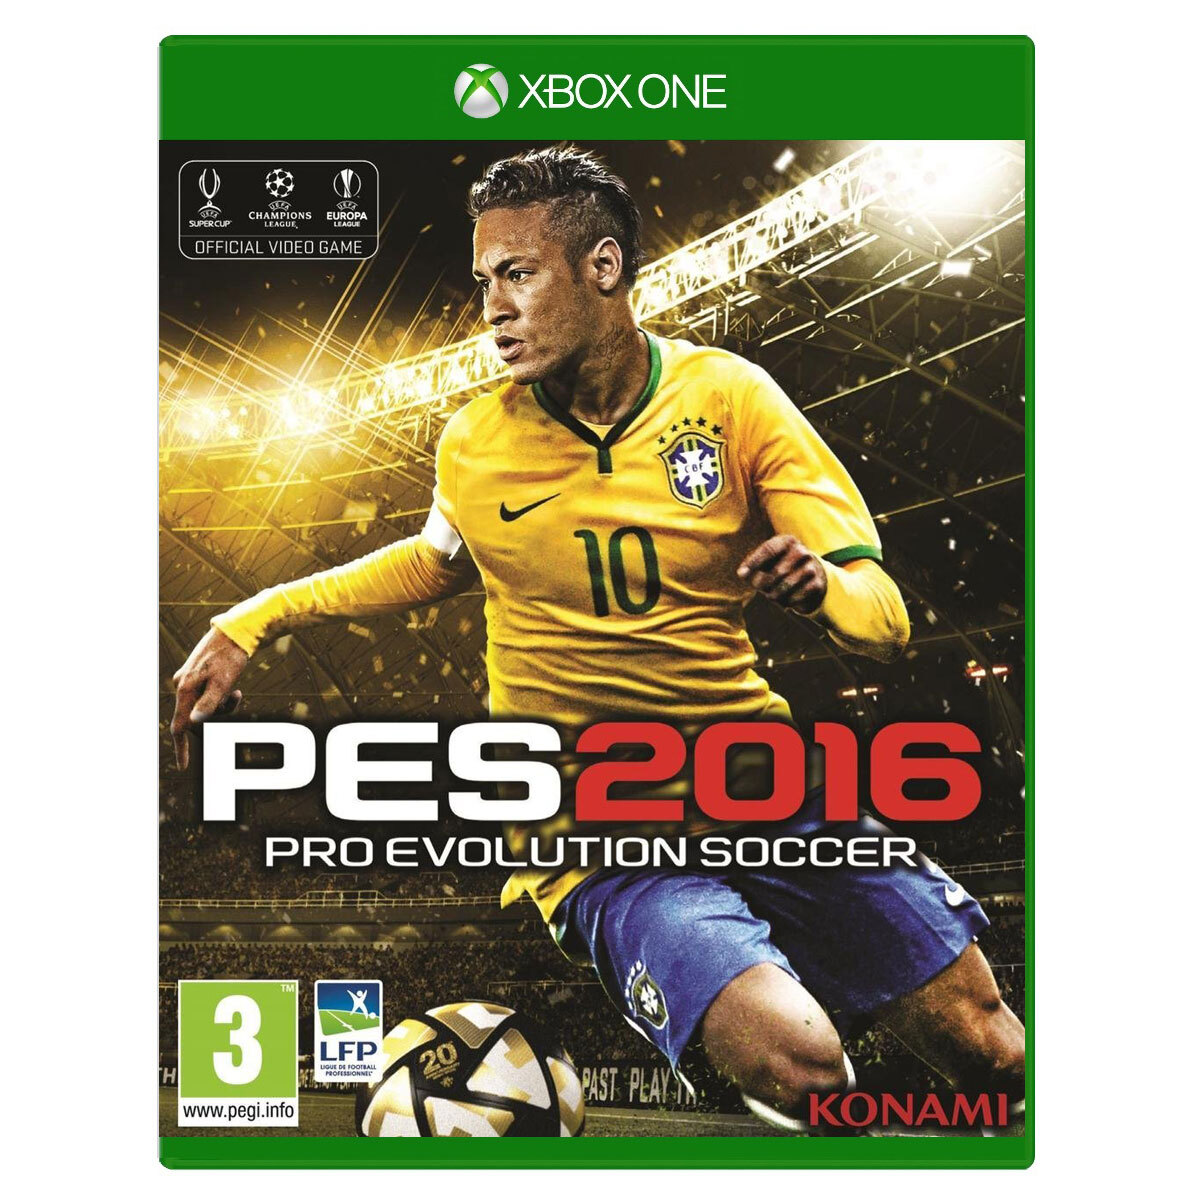 Konami Pro Evolution Soccer 2016, Xbox One Basis Engels Xbox One